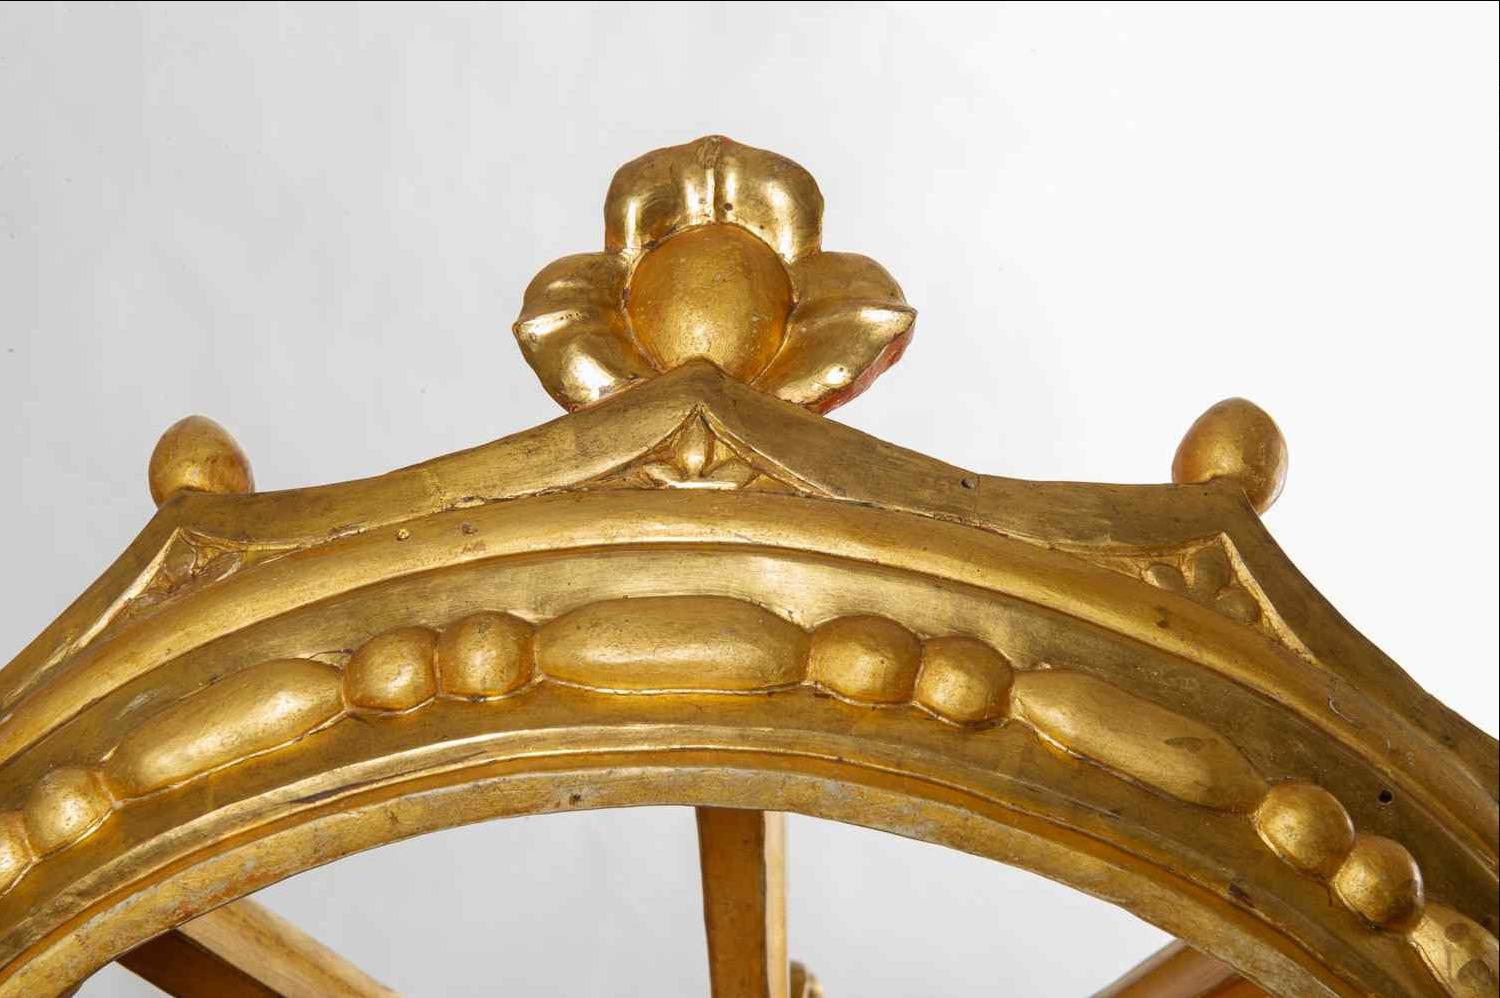  Gilded Wood Antique Crown Sculpture 3